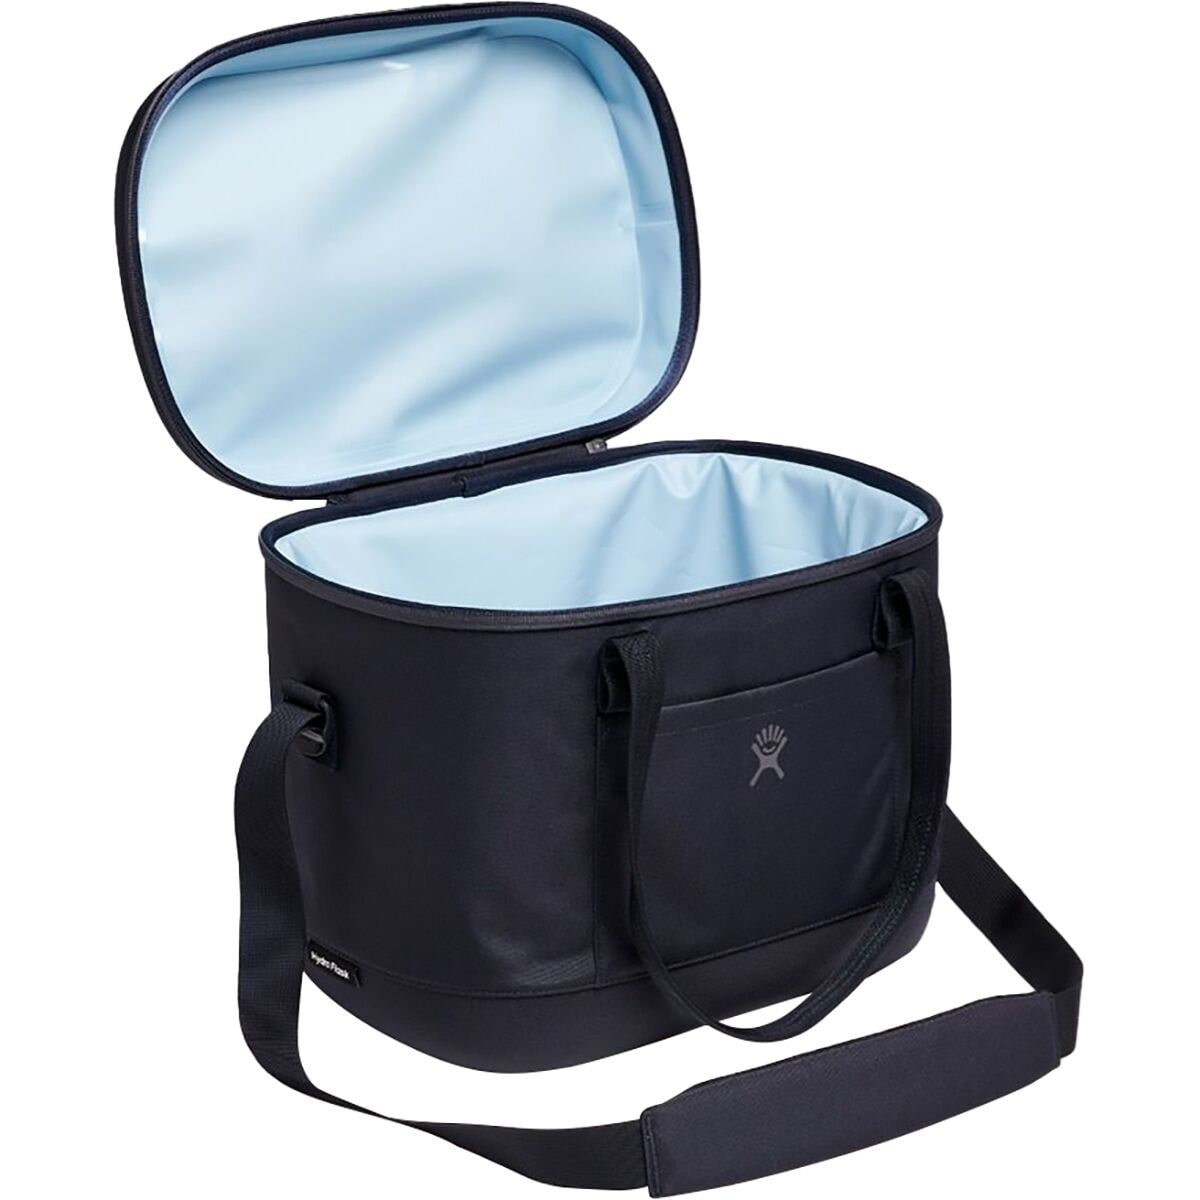 Hydro Flask Unbound Soft Cooler Pack 15 - Cool bag, Buy online